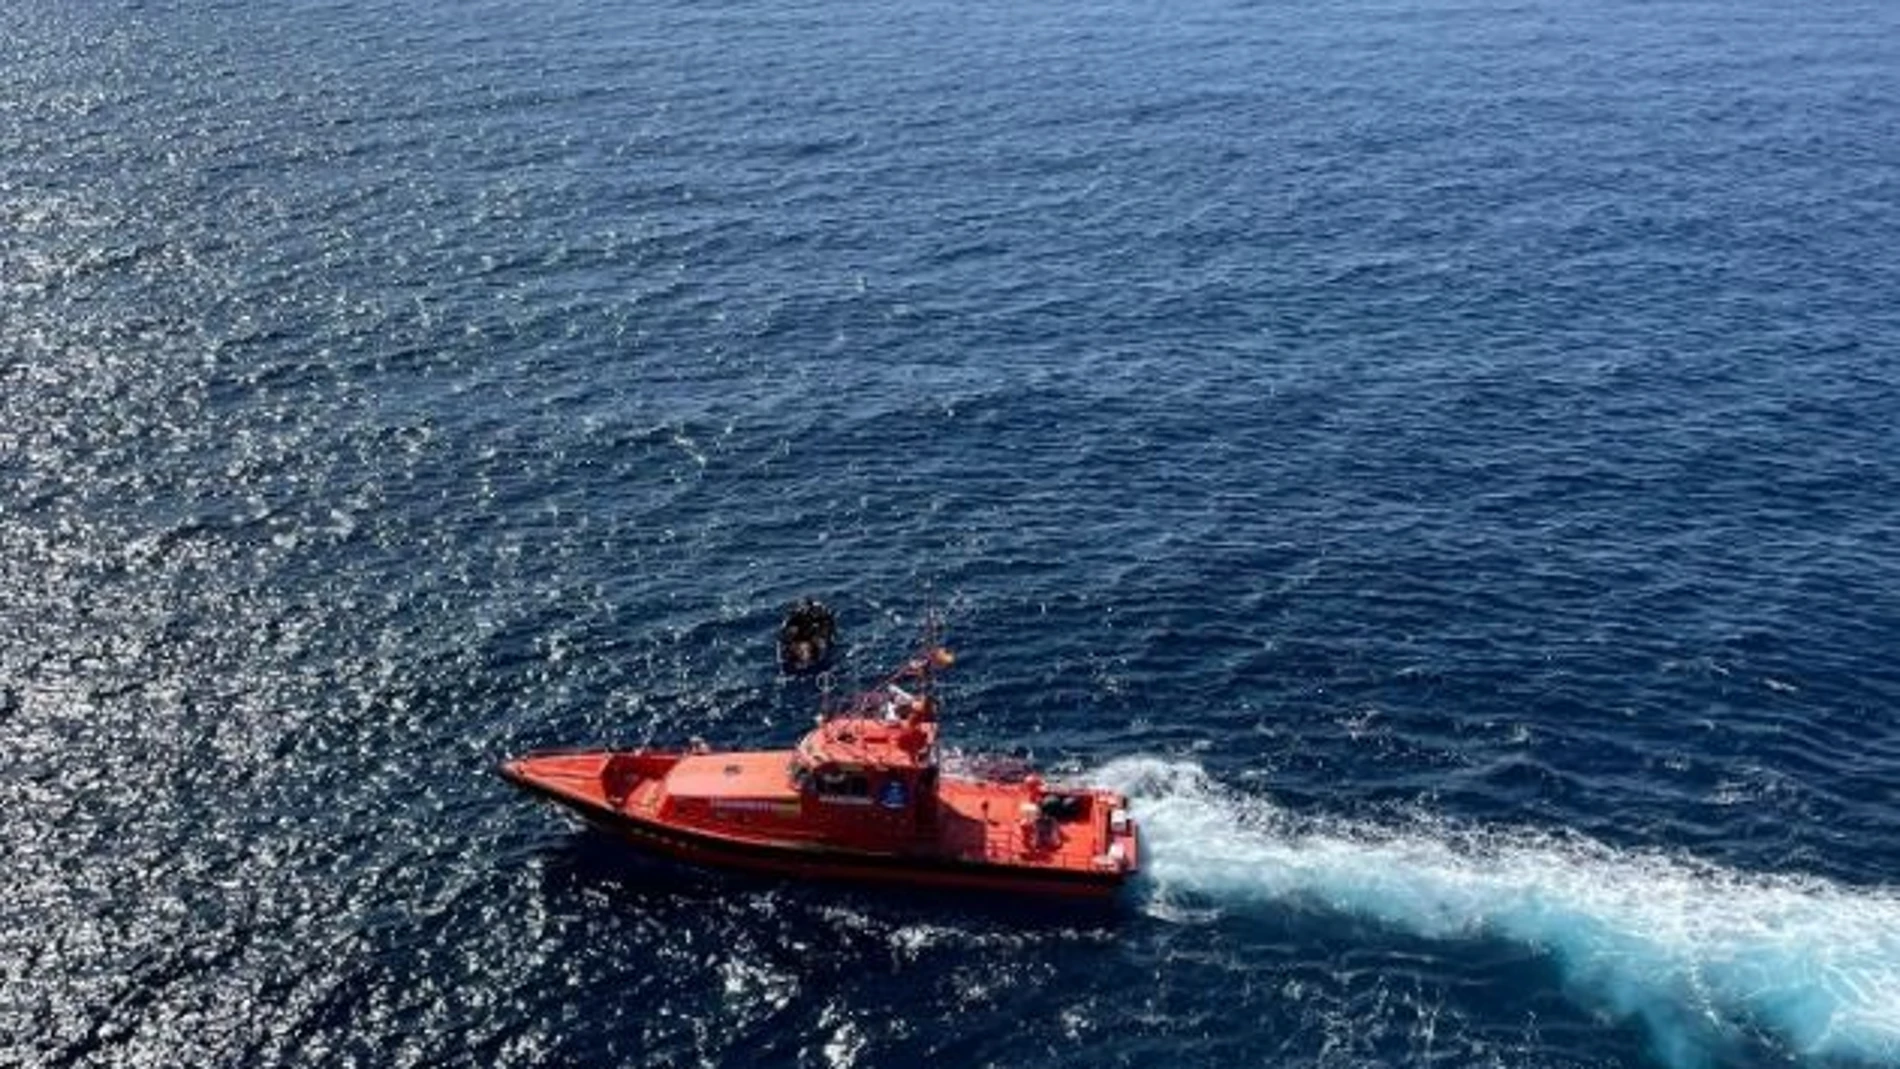 Interceptada una patera con 13 personas a bordo cerca de la costa de Calpe